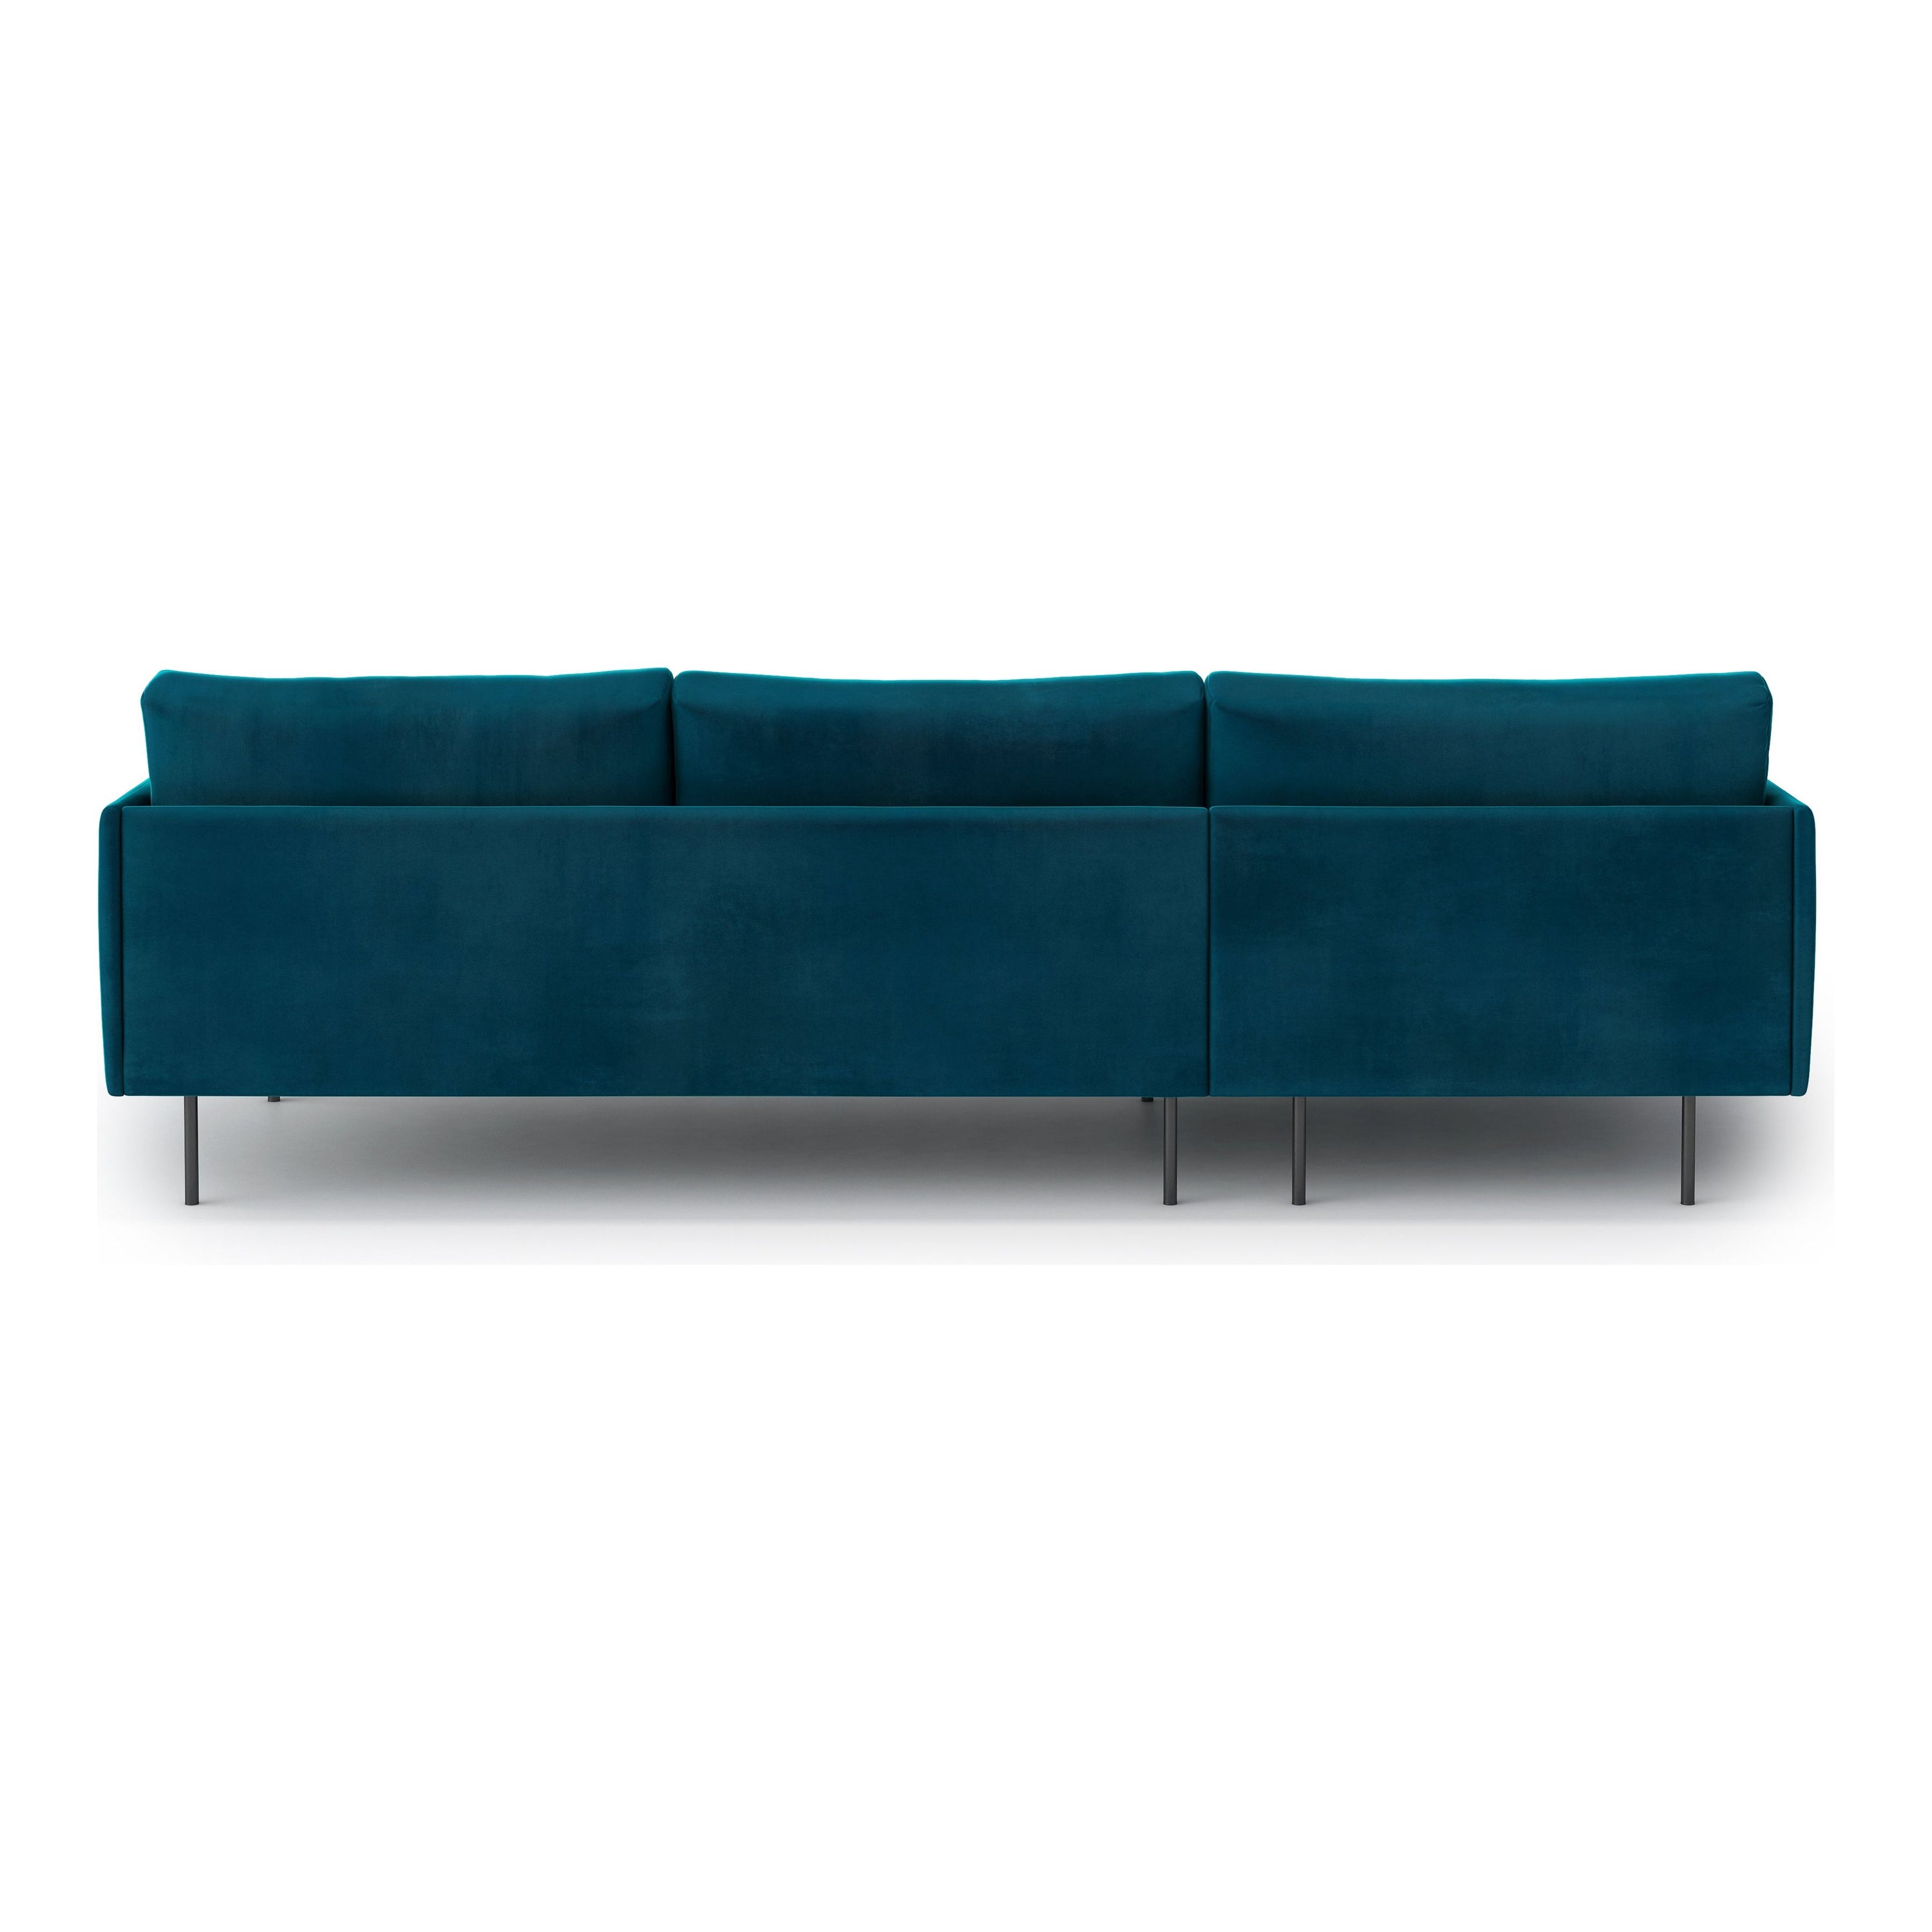 UMA kampinė sofa, mėlyna spalva, kairė pusė